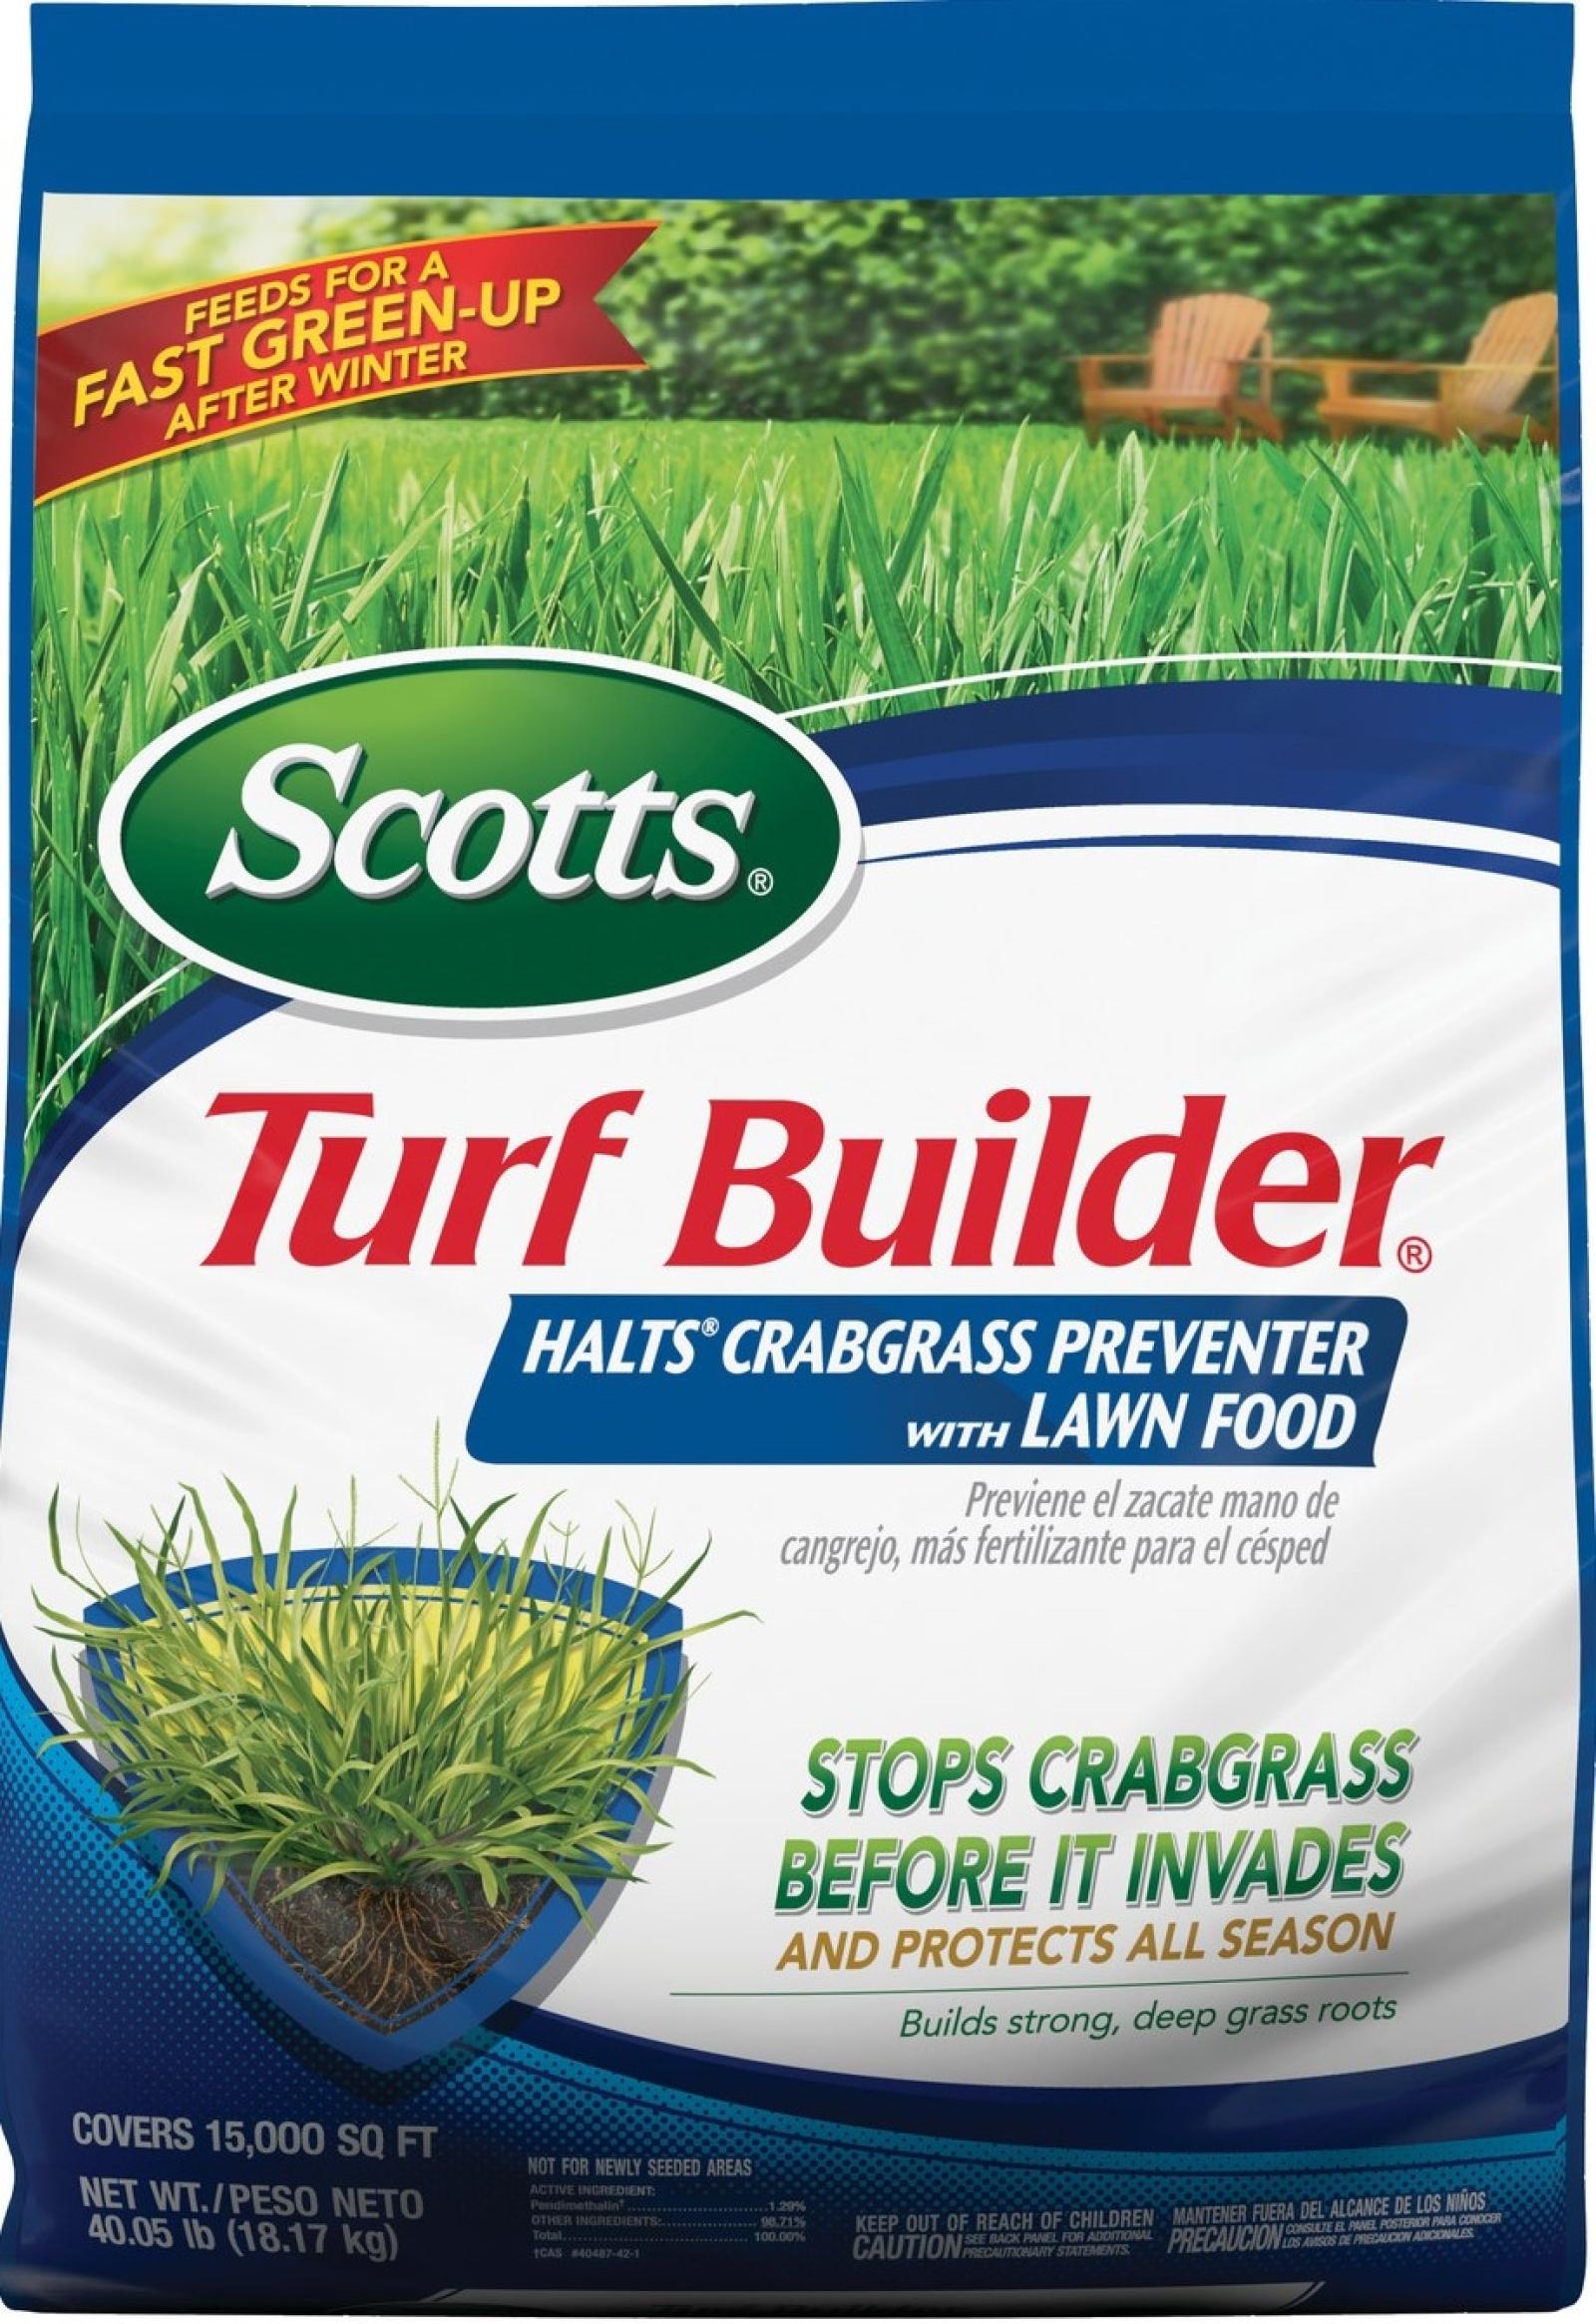 Scotts Turf Builder Halts Crabgrass Preventer With Lawn Food